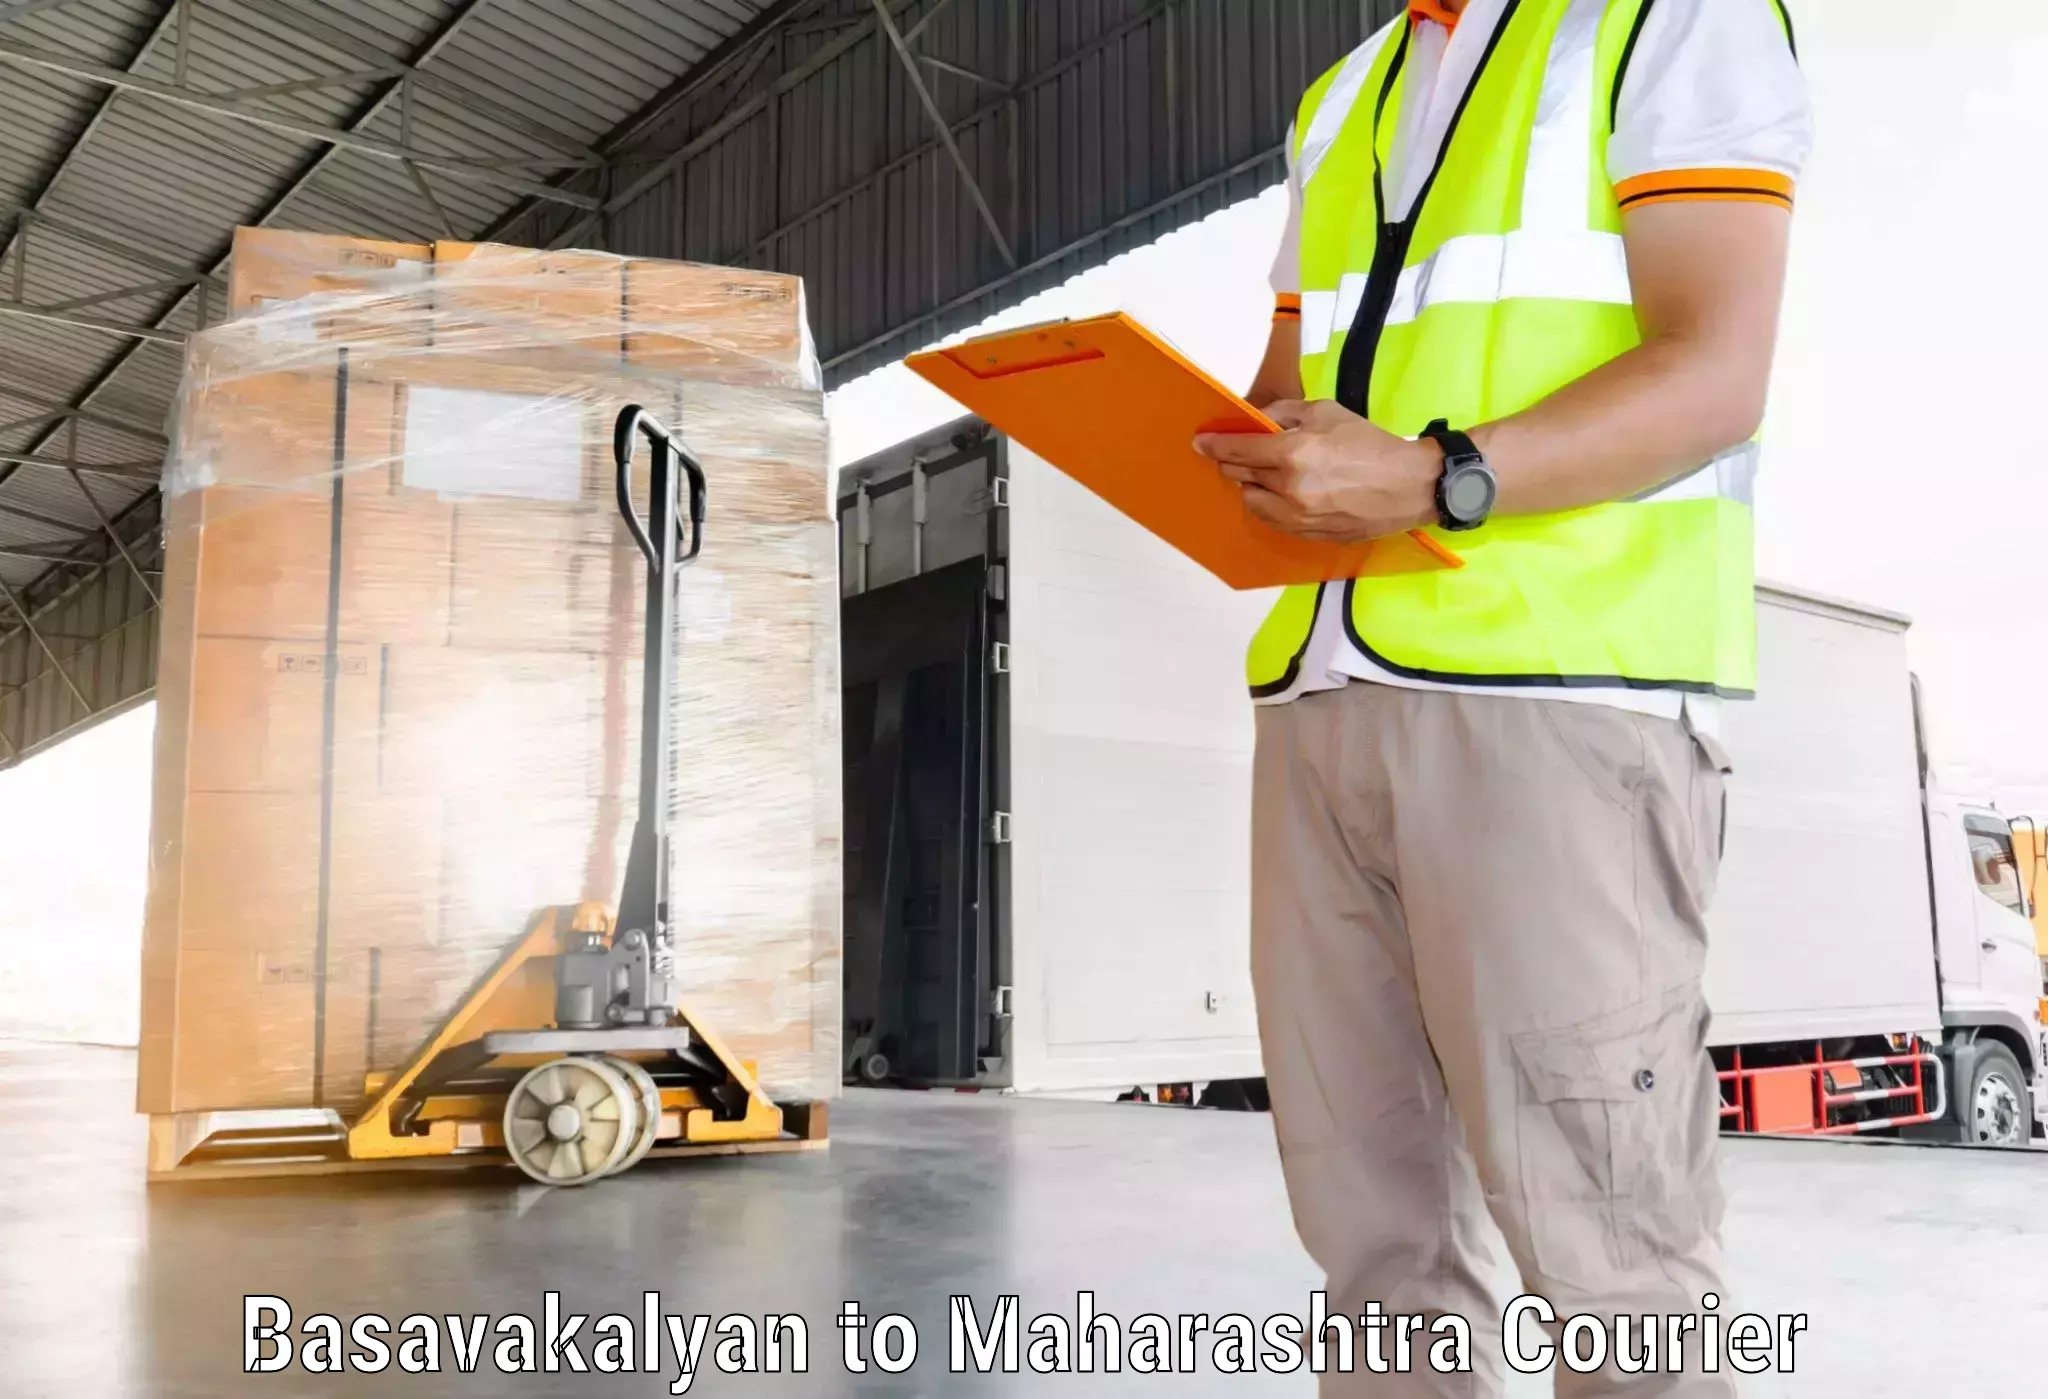 Fast delivery service in Basavakalyan to Sangamner